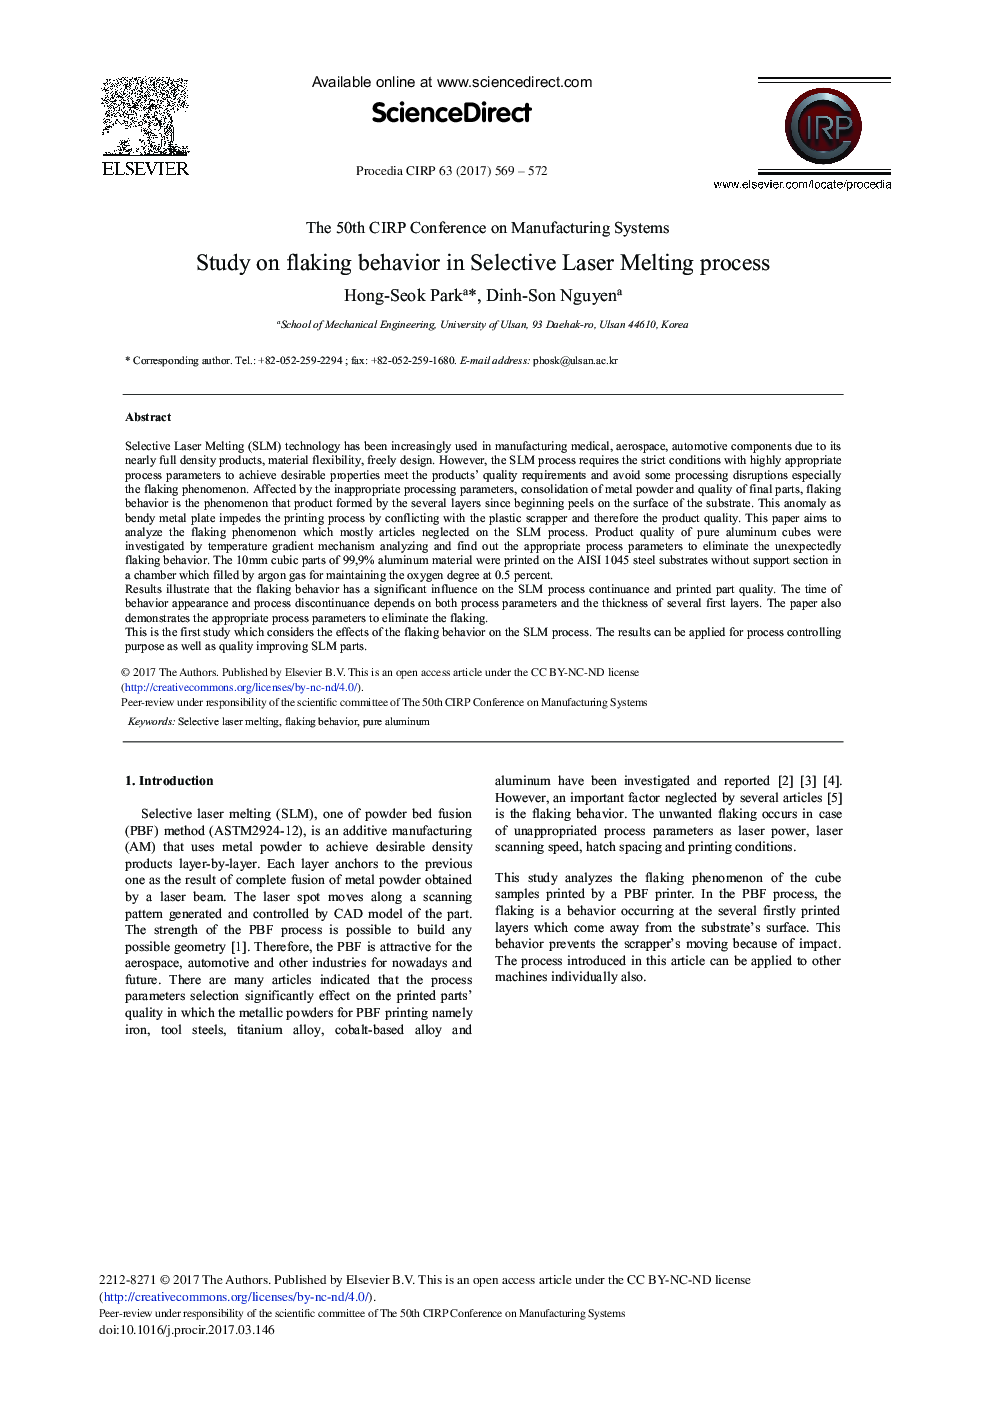 Study on Flaking Behavior in Selective Laser Melting Process